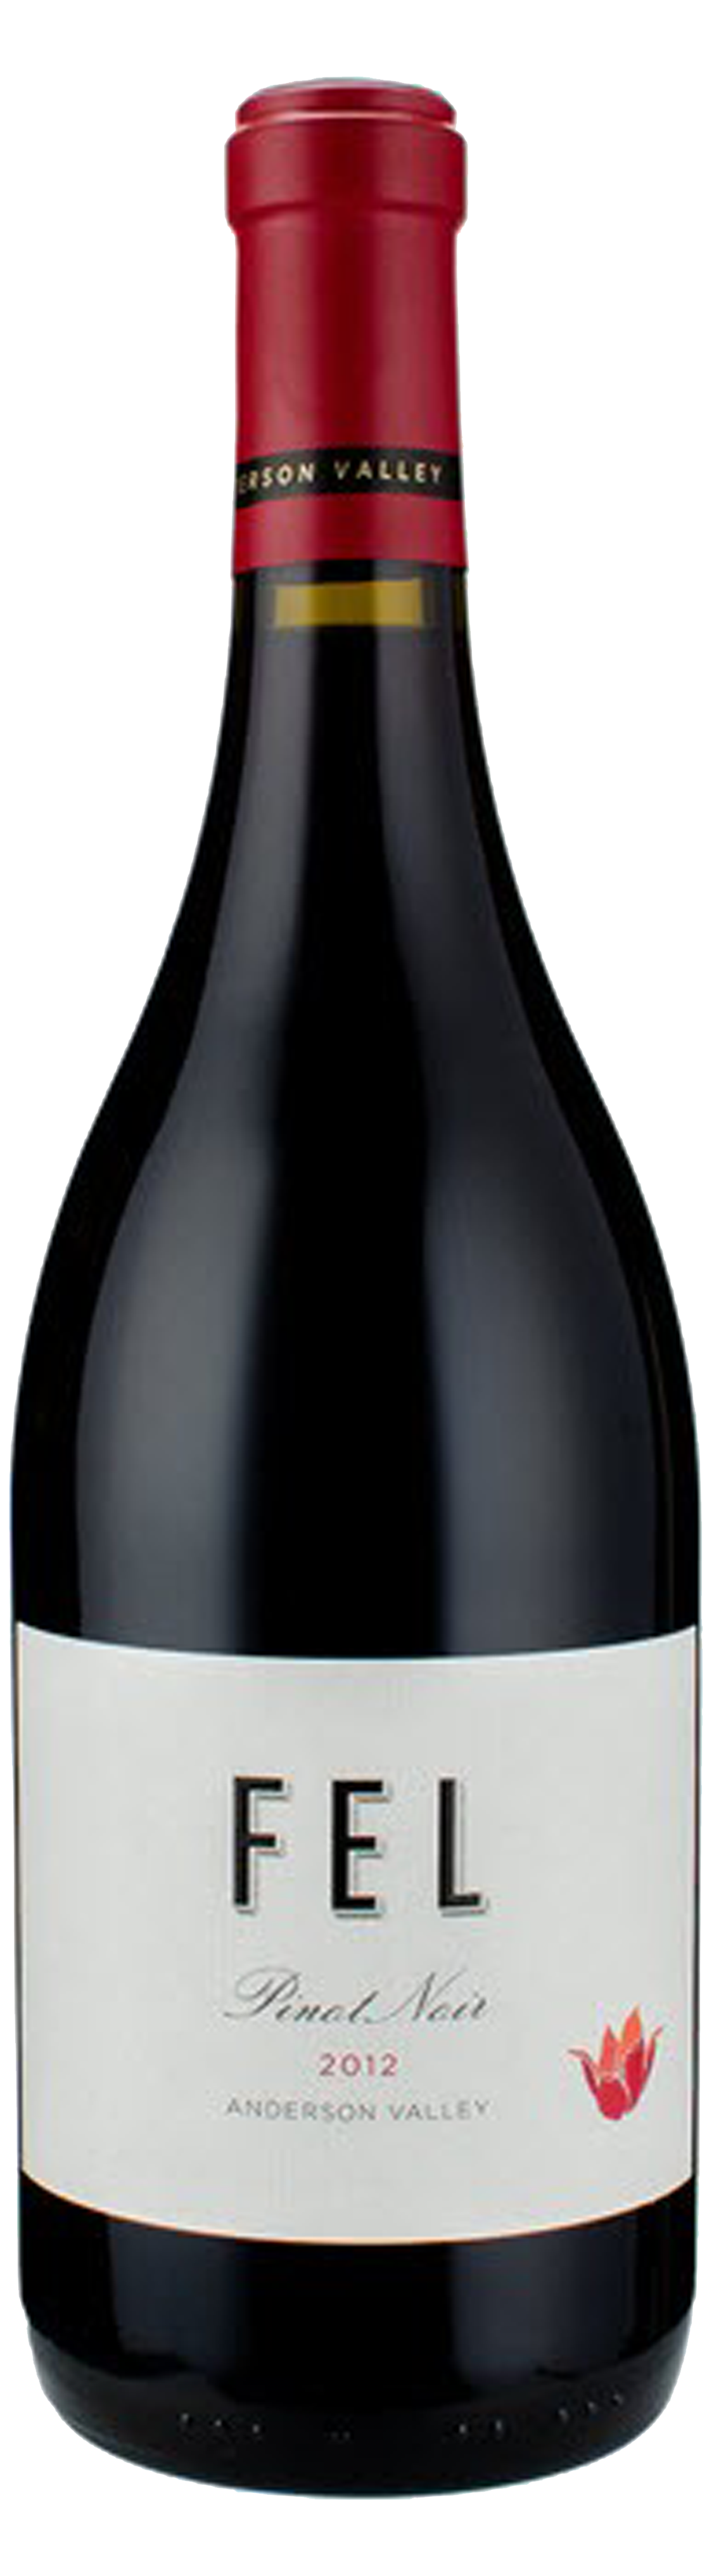 Bottle shot of 2012 FEL Anderson Valley Pinot Noir